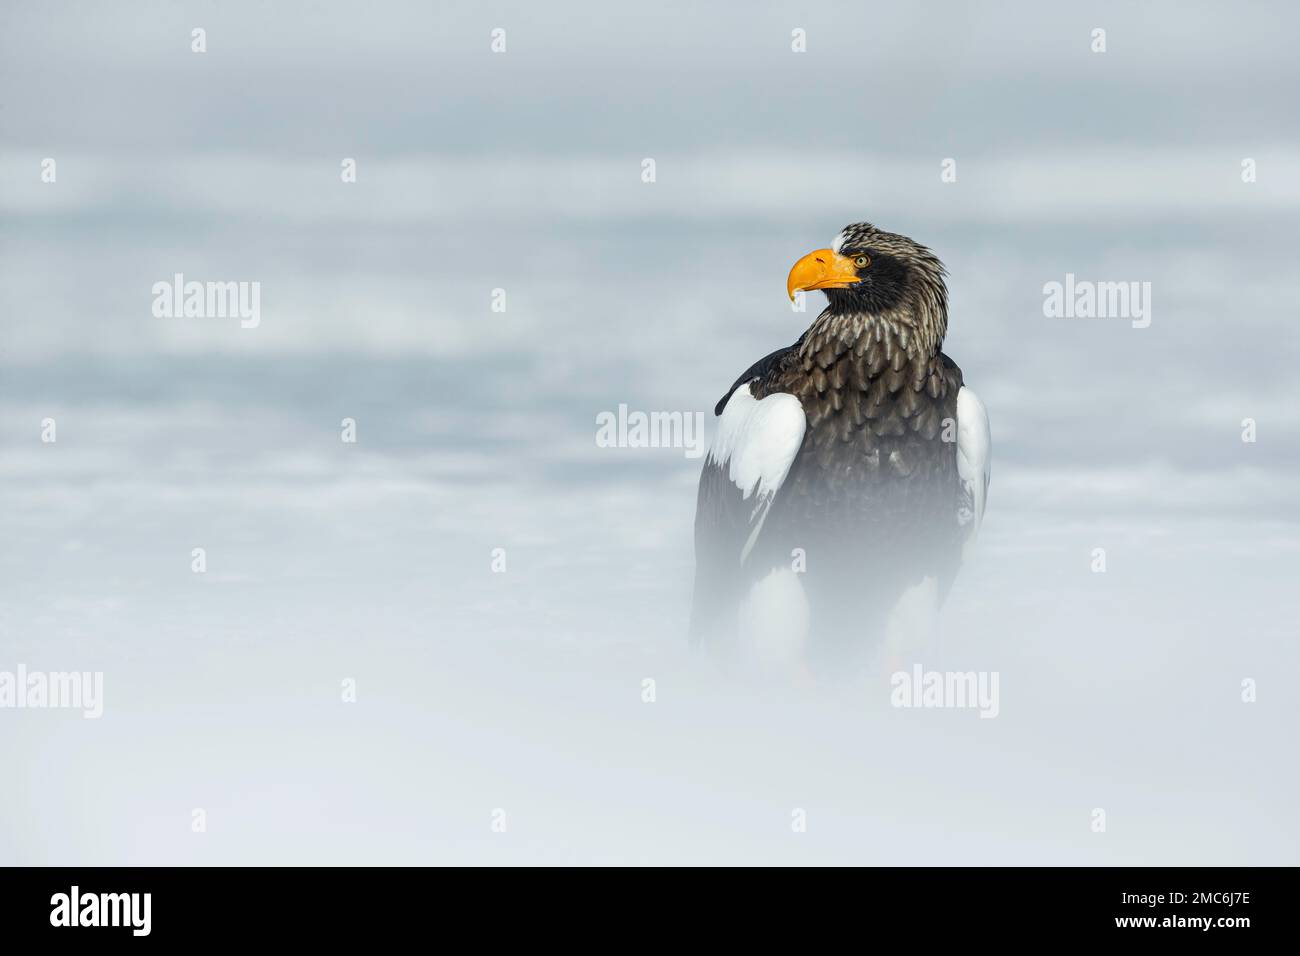 Steller's sea eagle (Haliaeetus pelagicus) on ground in snow, Hokkaido, Japan Stock Photo